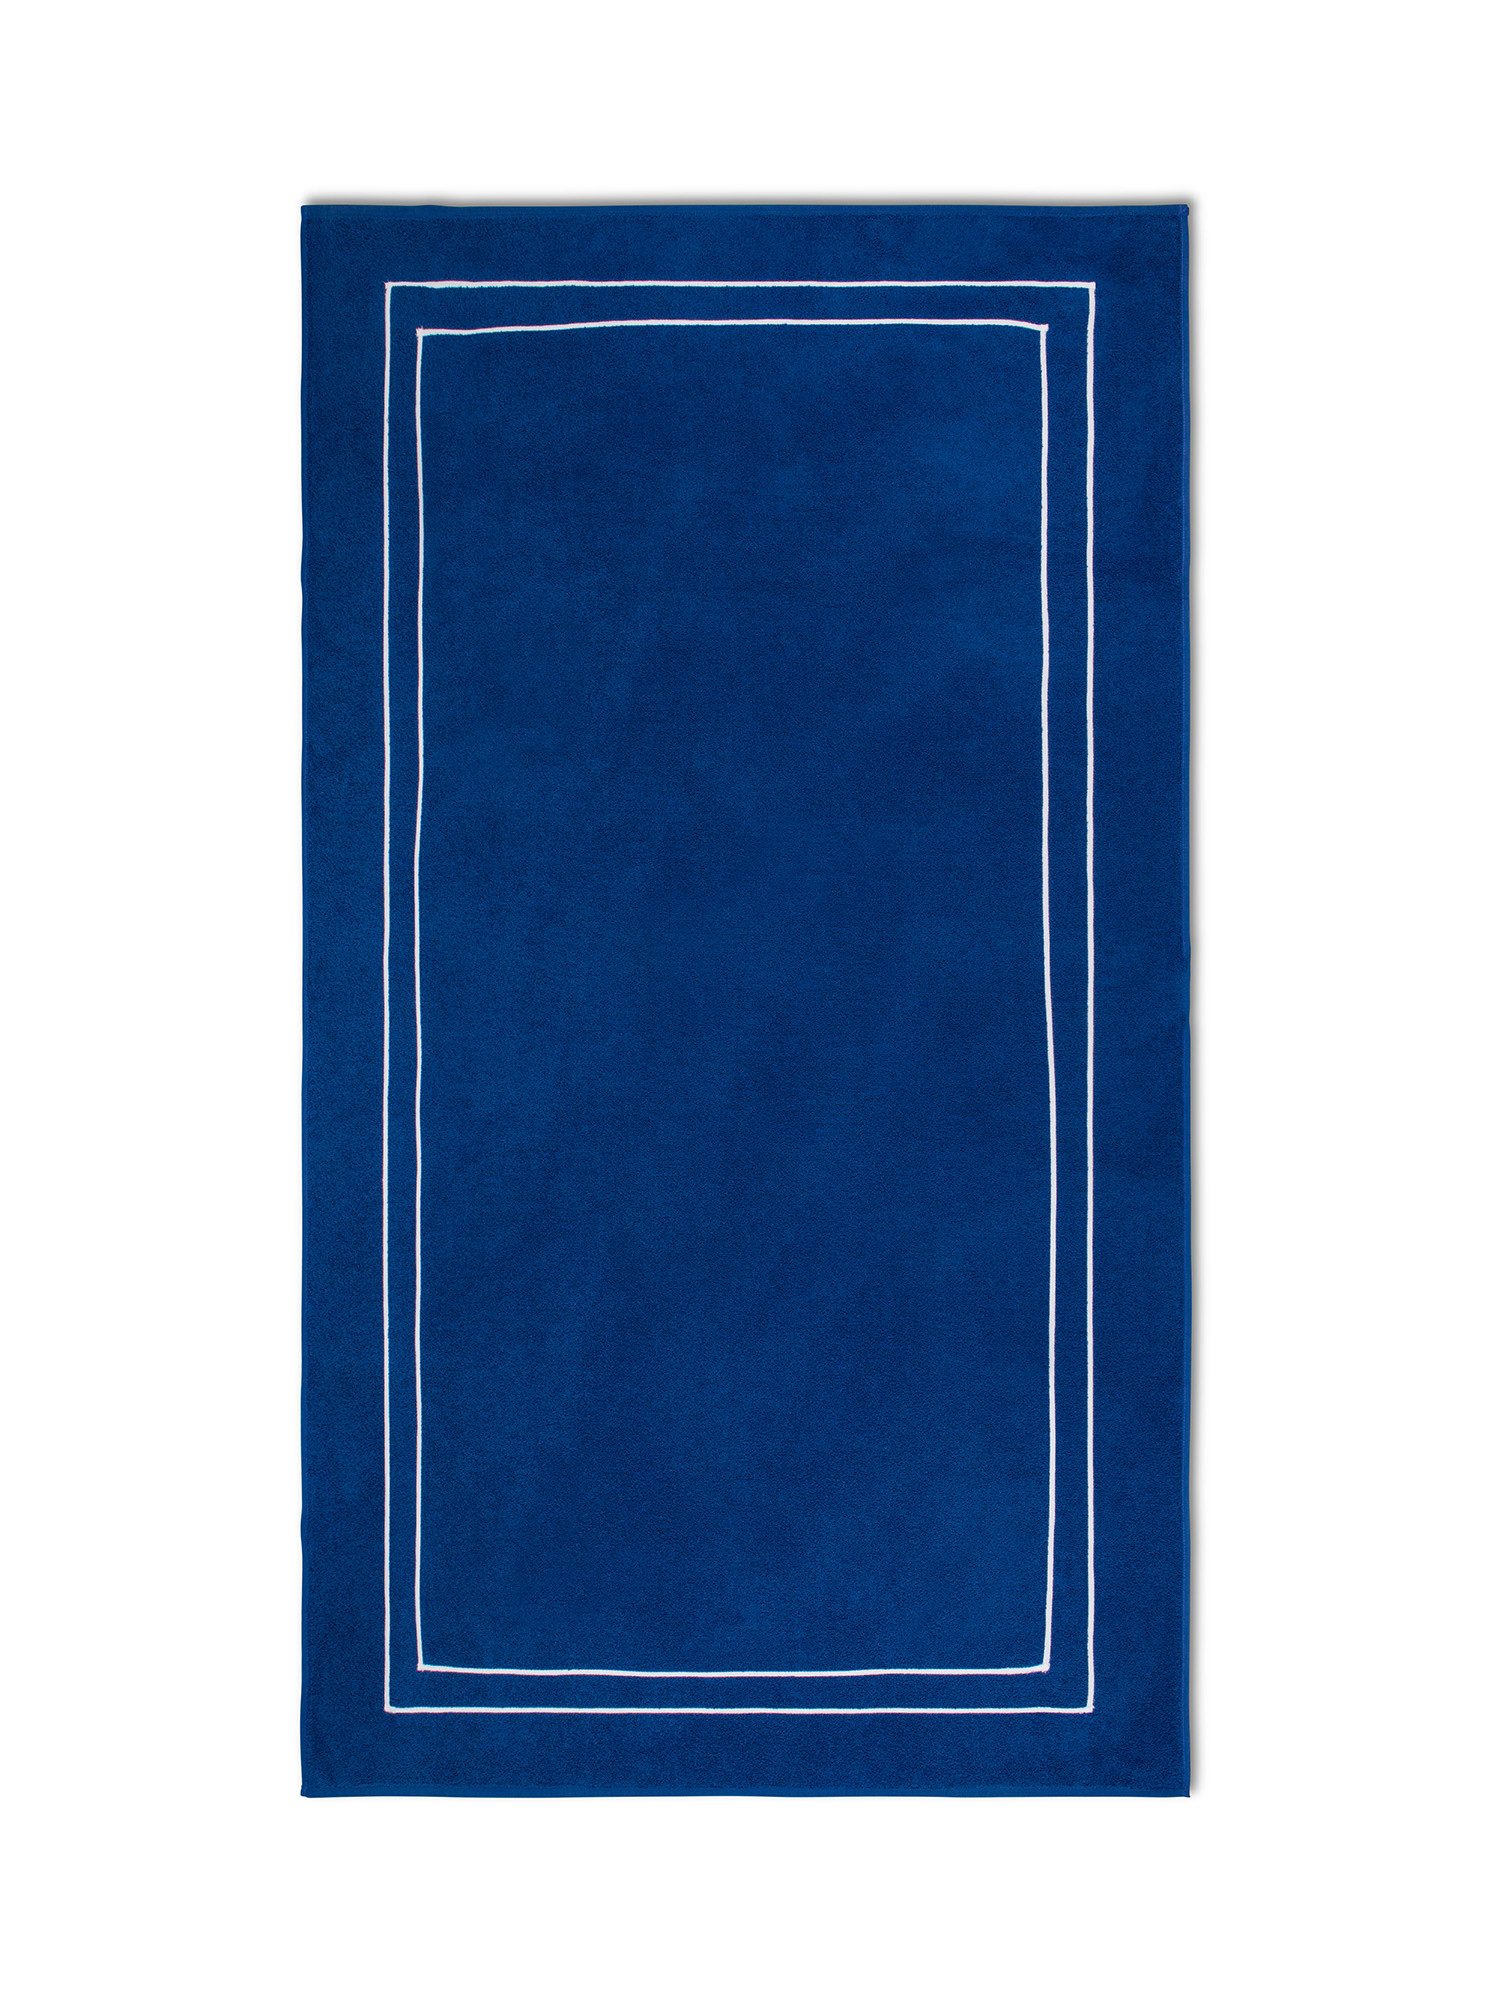 Telo mare spugna di cotone motivo cornice, Blu, large image number 0